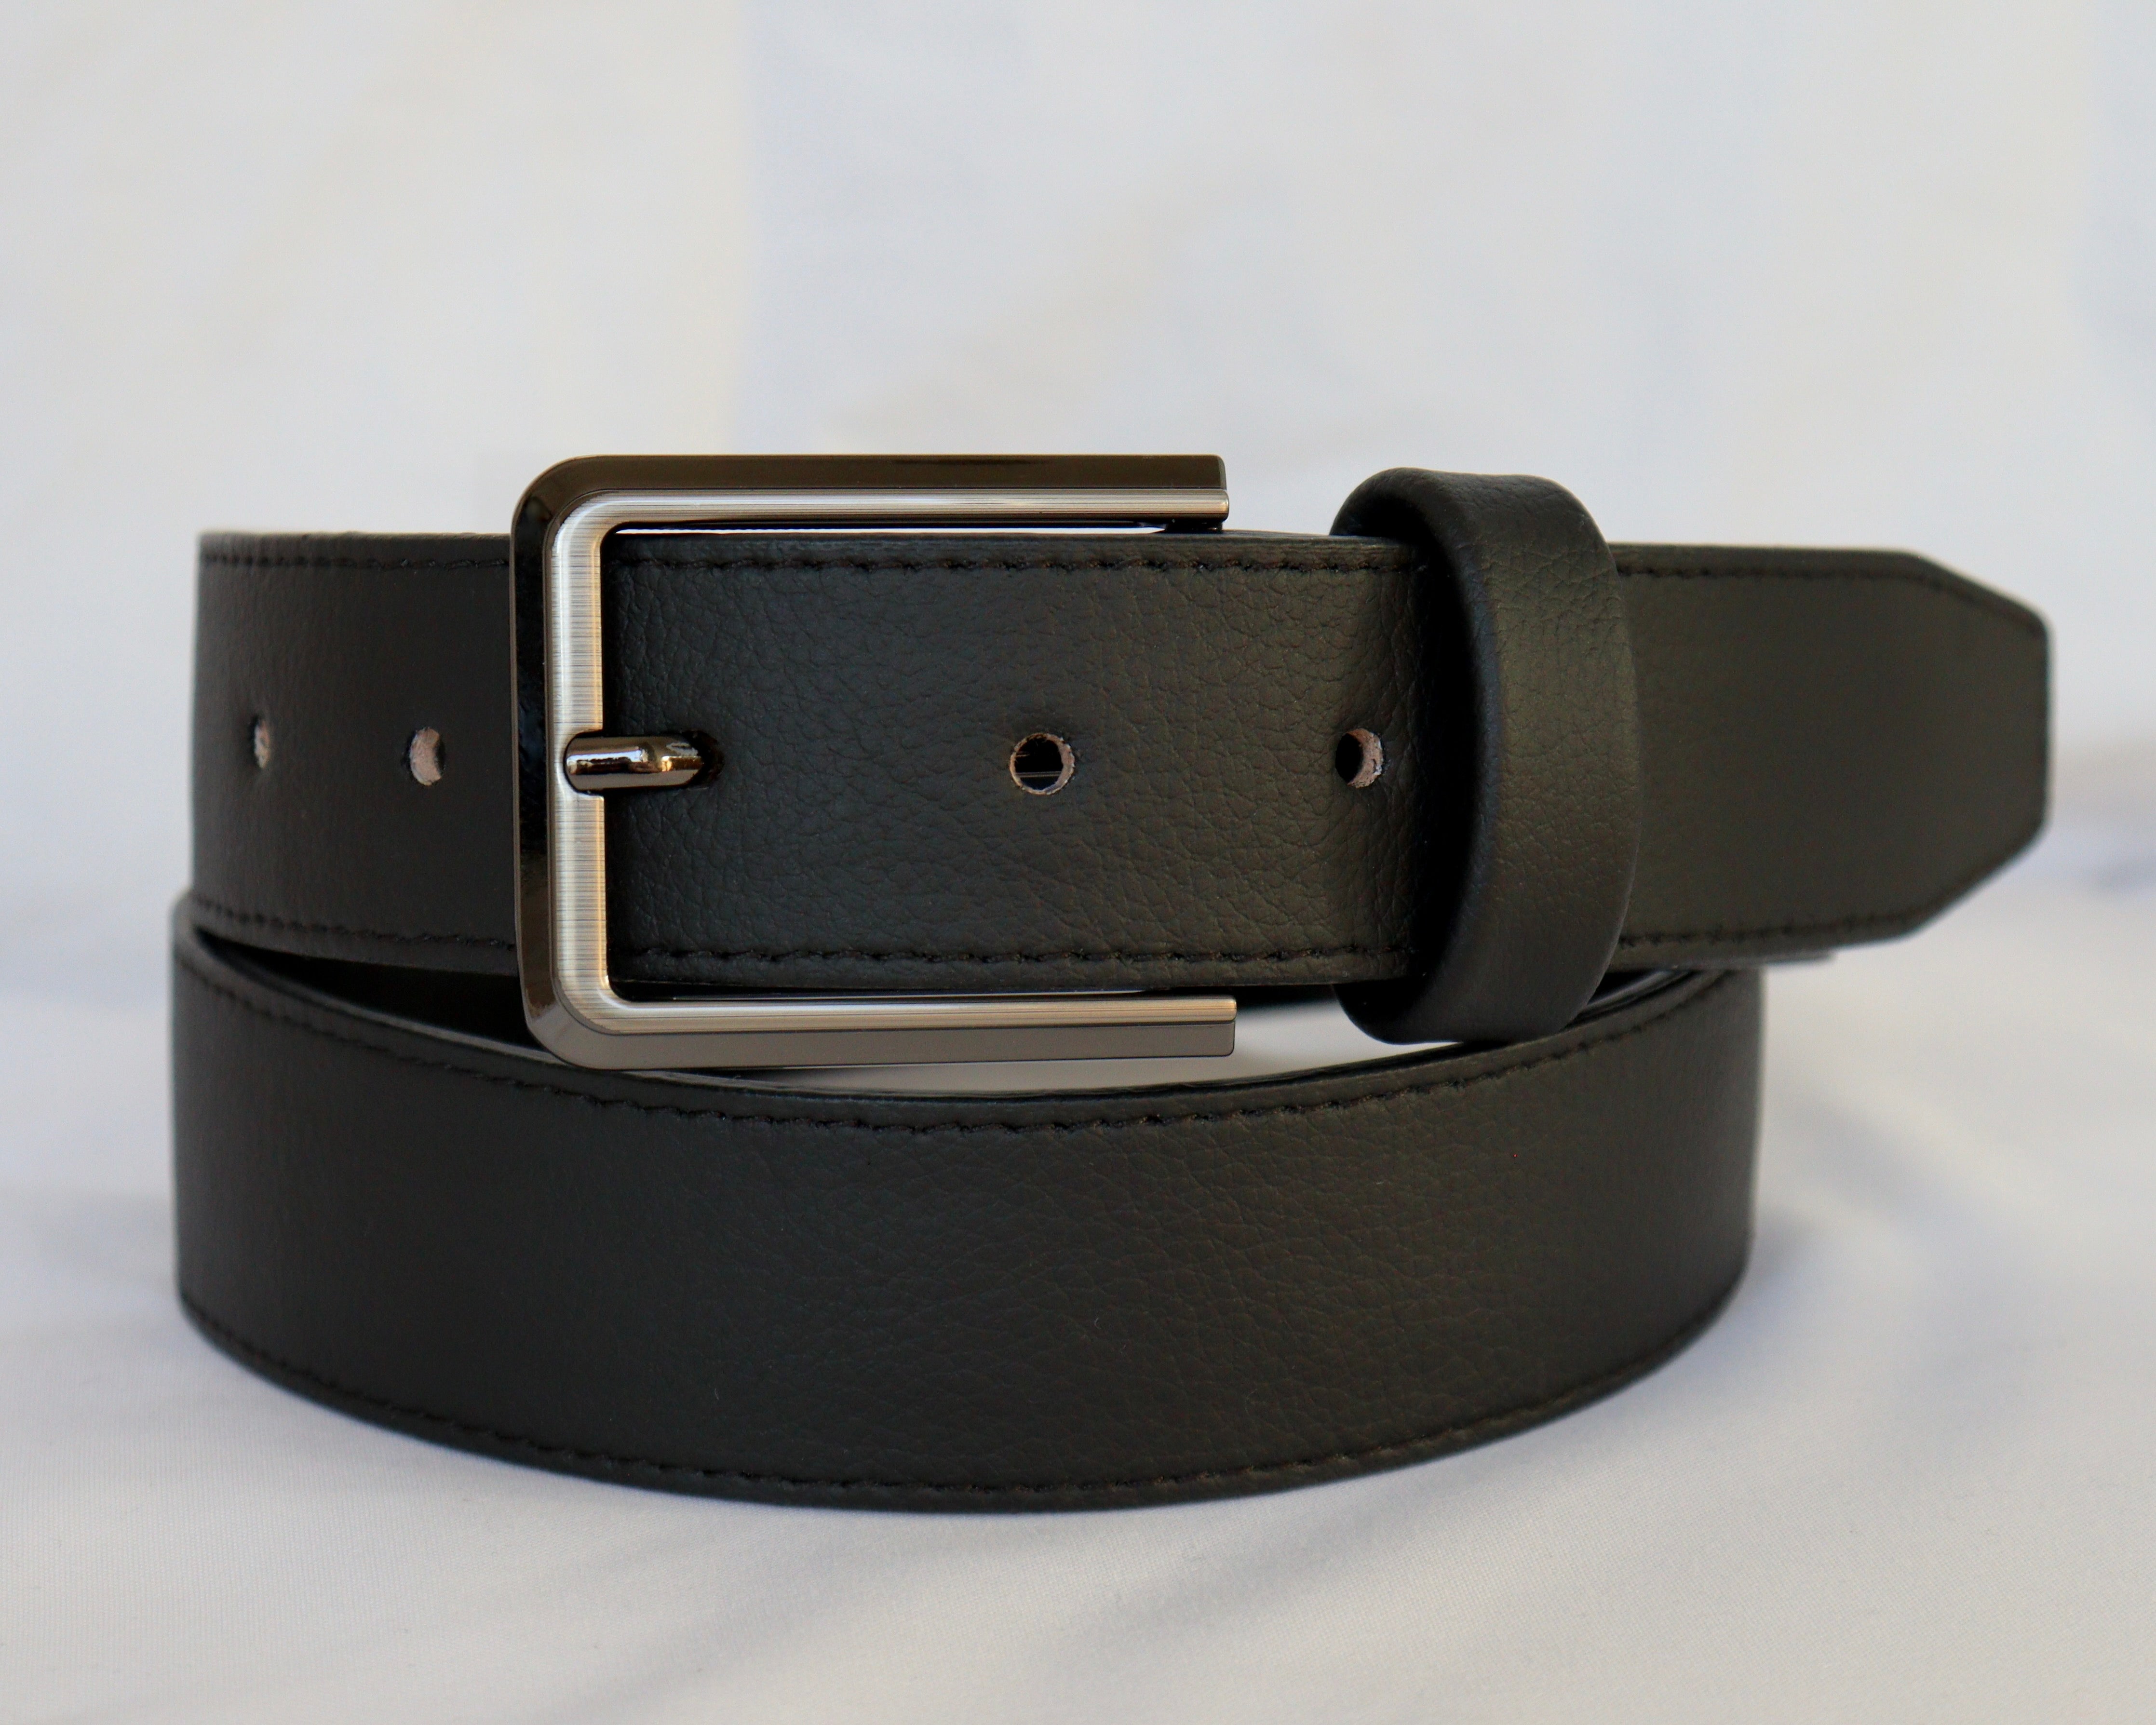 Lv belt Black / Silver Buckle - Size 80 Cm / 26-28 for Sale in